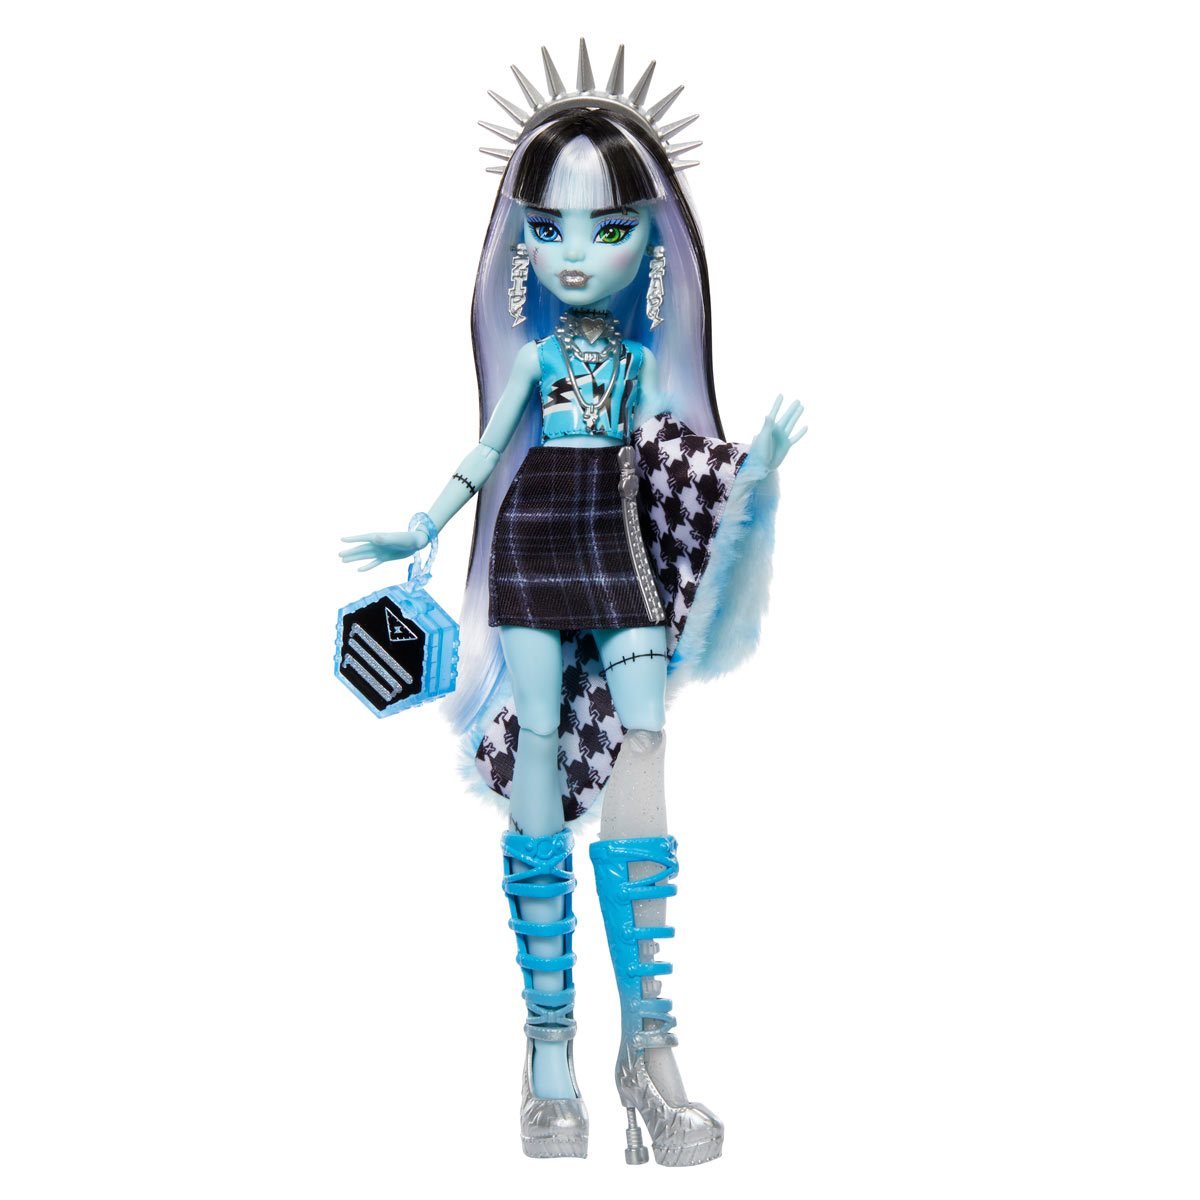 Monster High Skulltimate Secrets Fearidescent Series Doll & Access